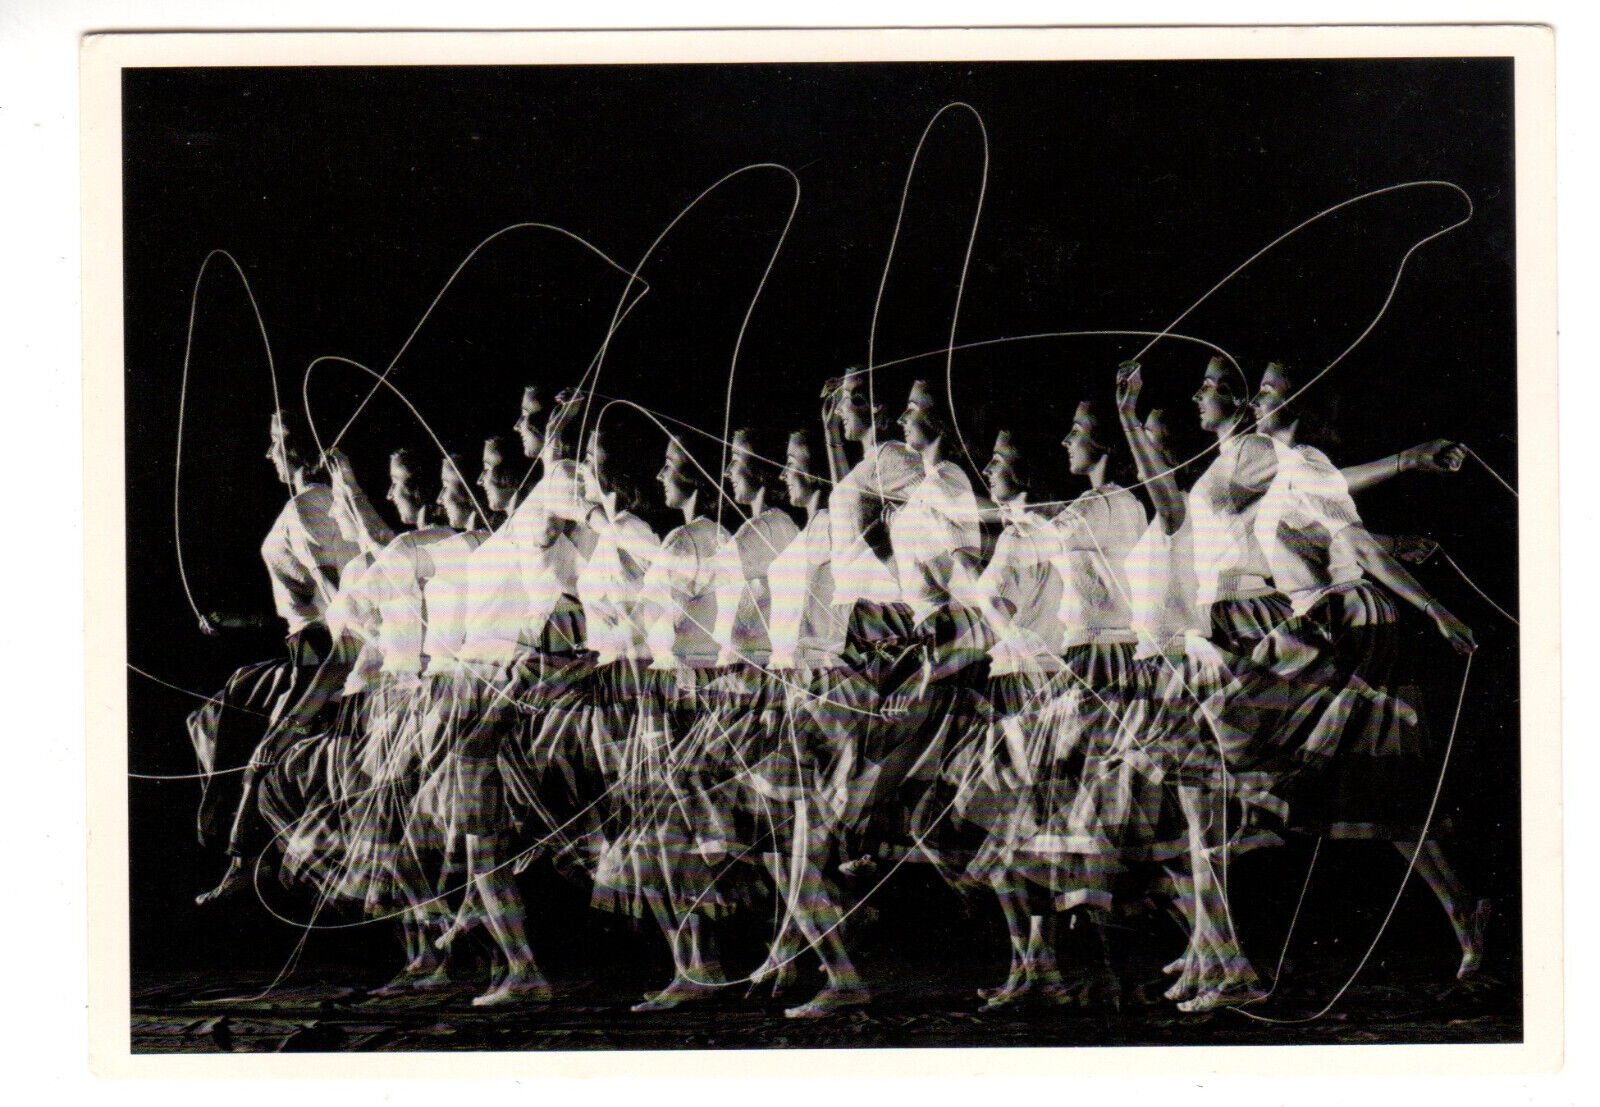 Postcard: Harold Edgerton Moving Skip Rope, 1952 - time-lapse